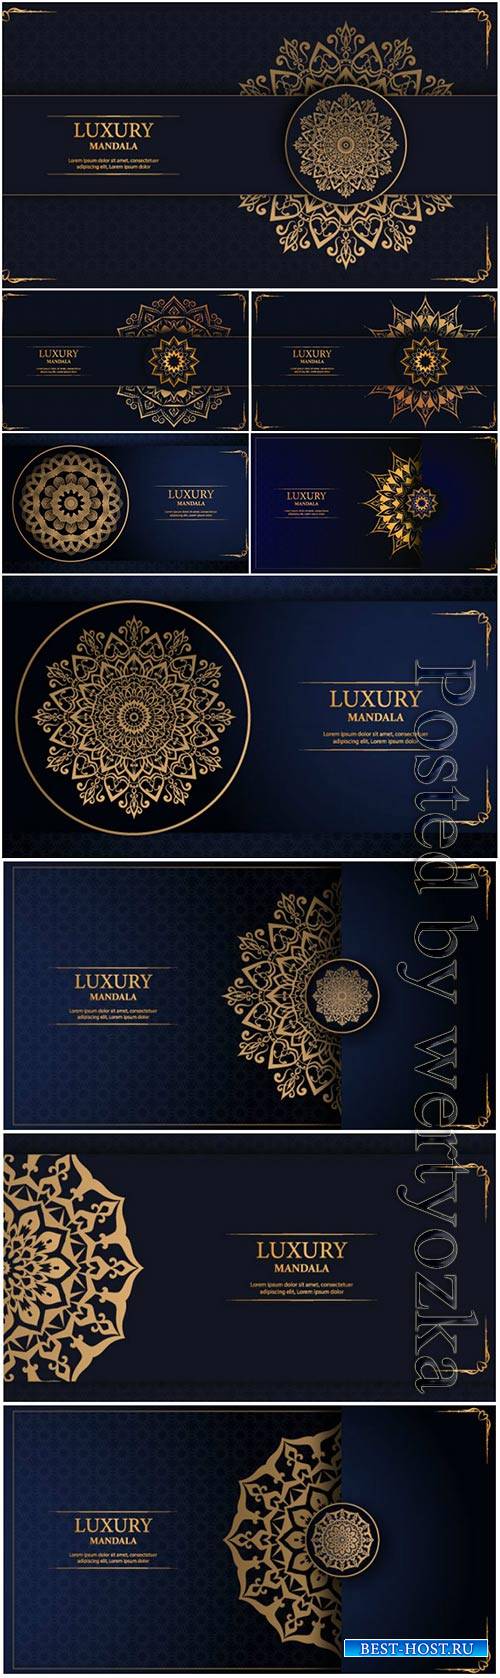 Luxury mandala arabesque ornamental vector background